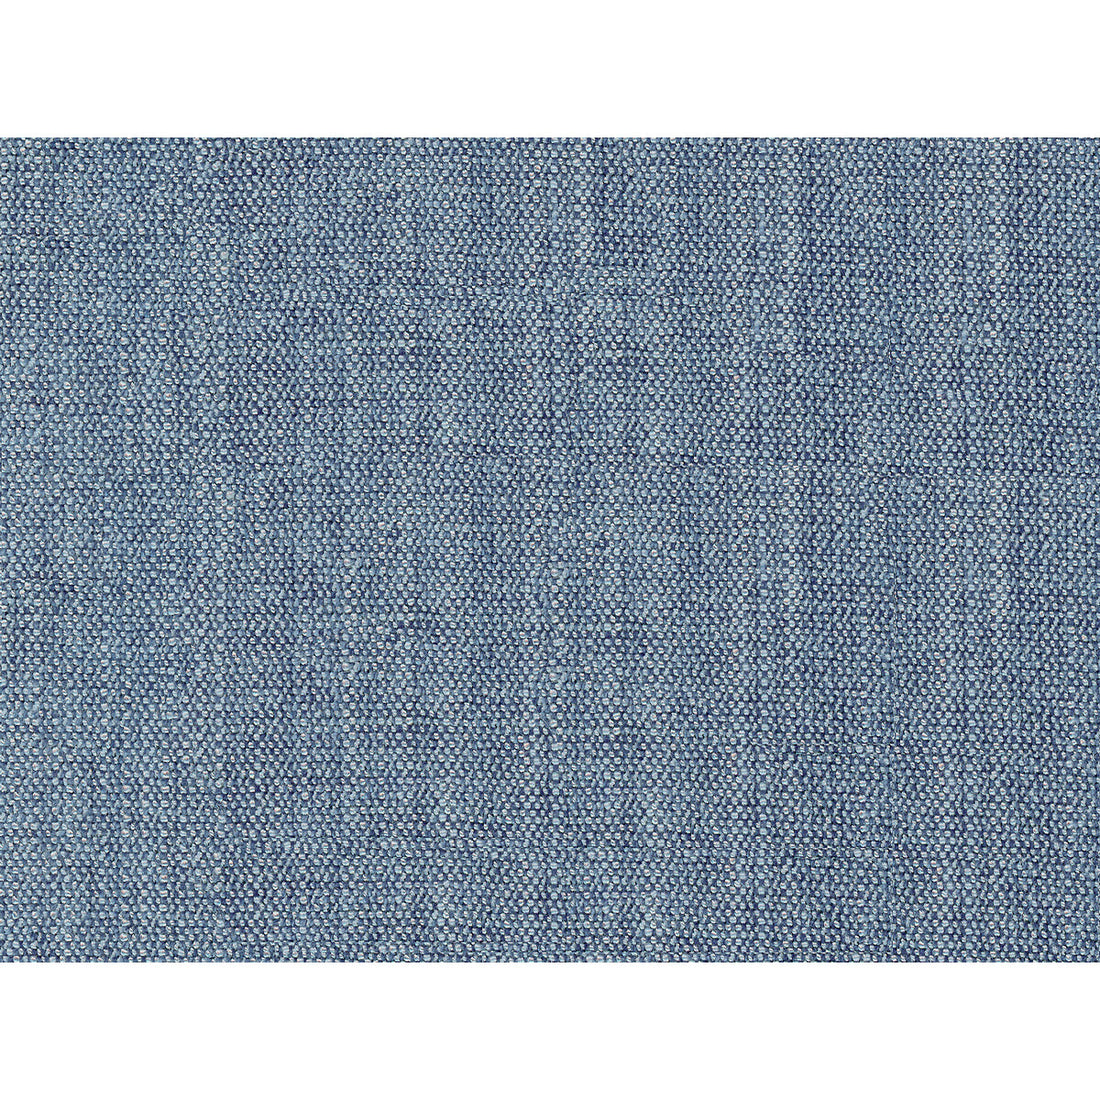 Kravet Smart fabric in 34313-5 color - pattern 34313.5.0 - by Kravet Smart